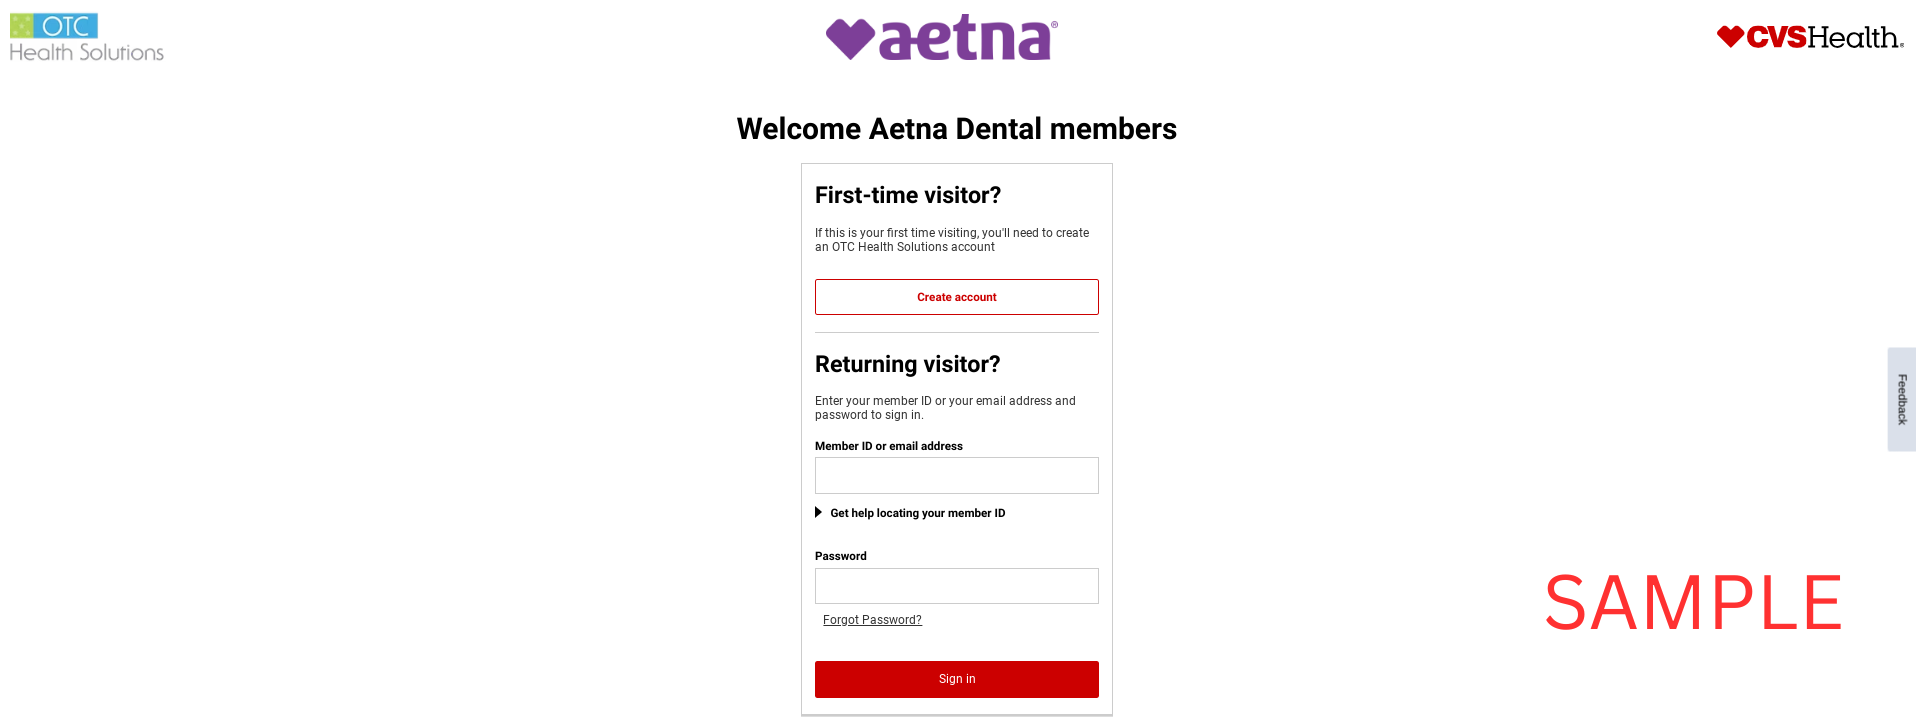 Aetna Dental Health 2023 | CVS | OTCHS | Medicaid | www.cvs.com/otchs/aetnadentalotc